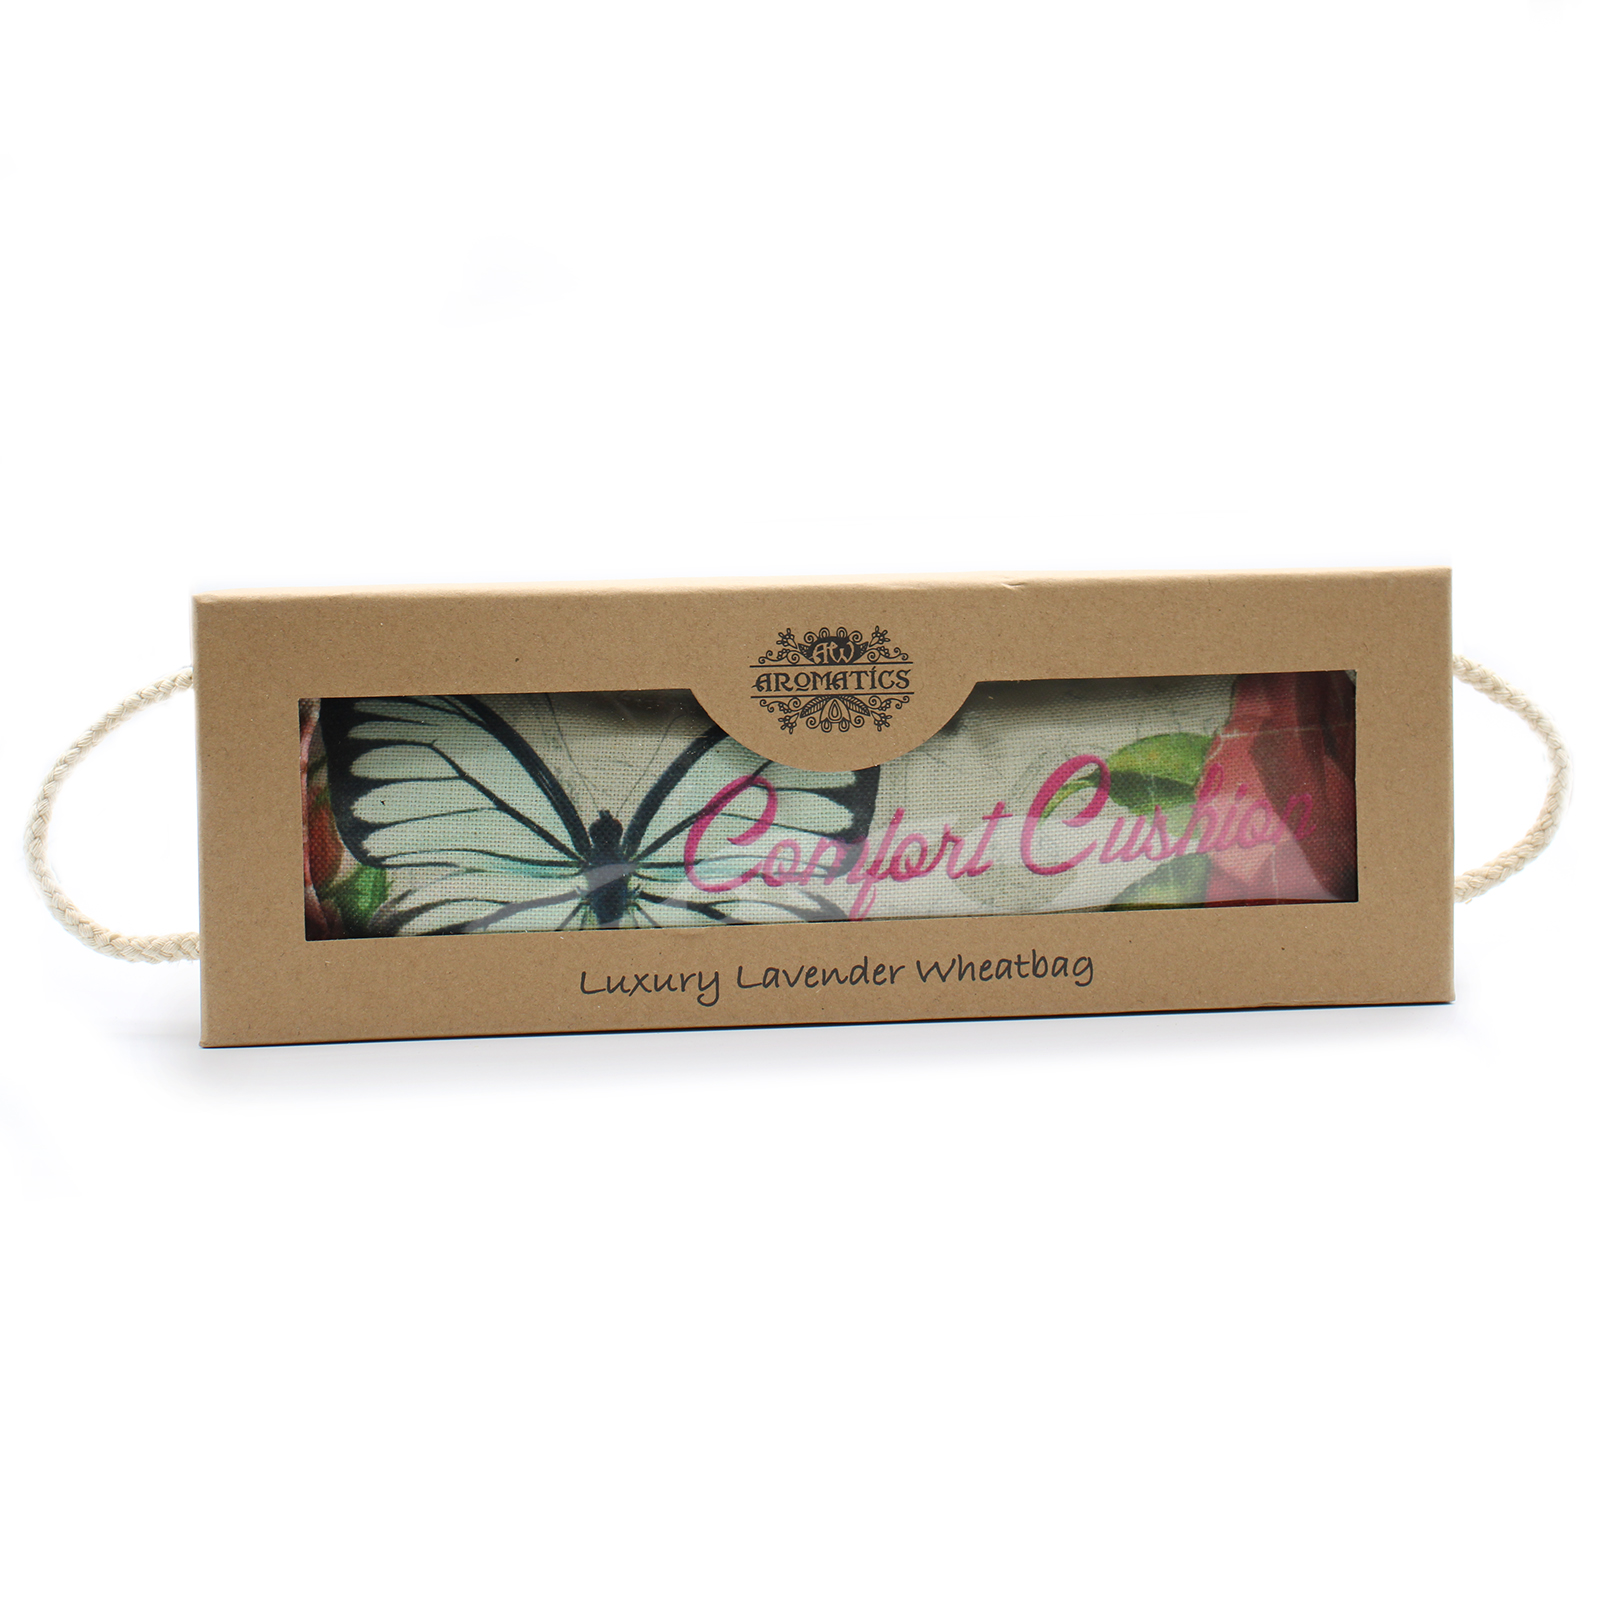 Luxury Lavender Wheat Bag - Butterflies & Roses